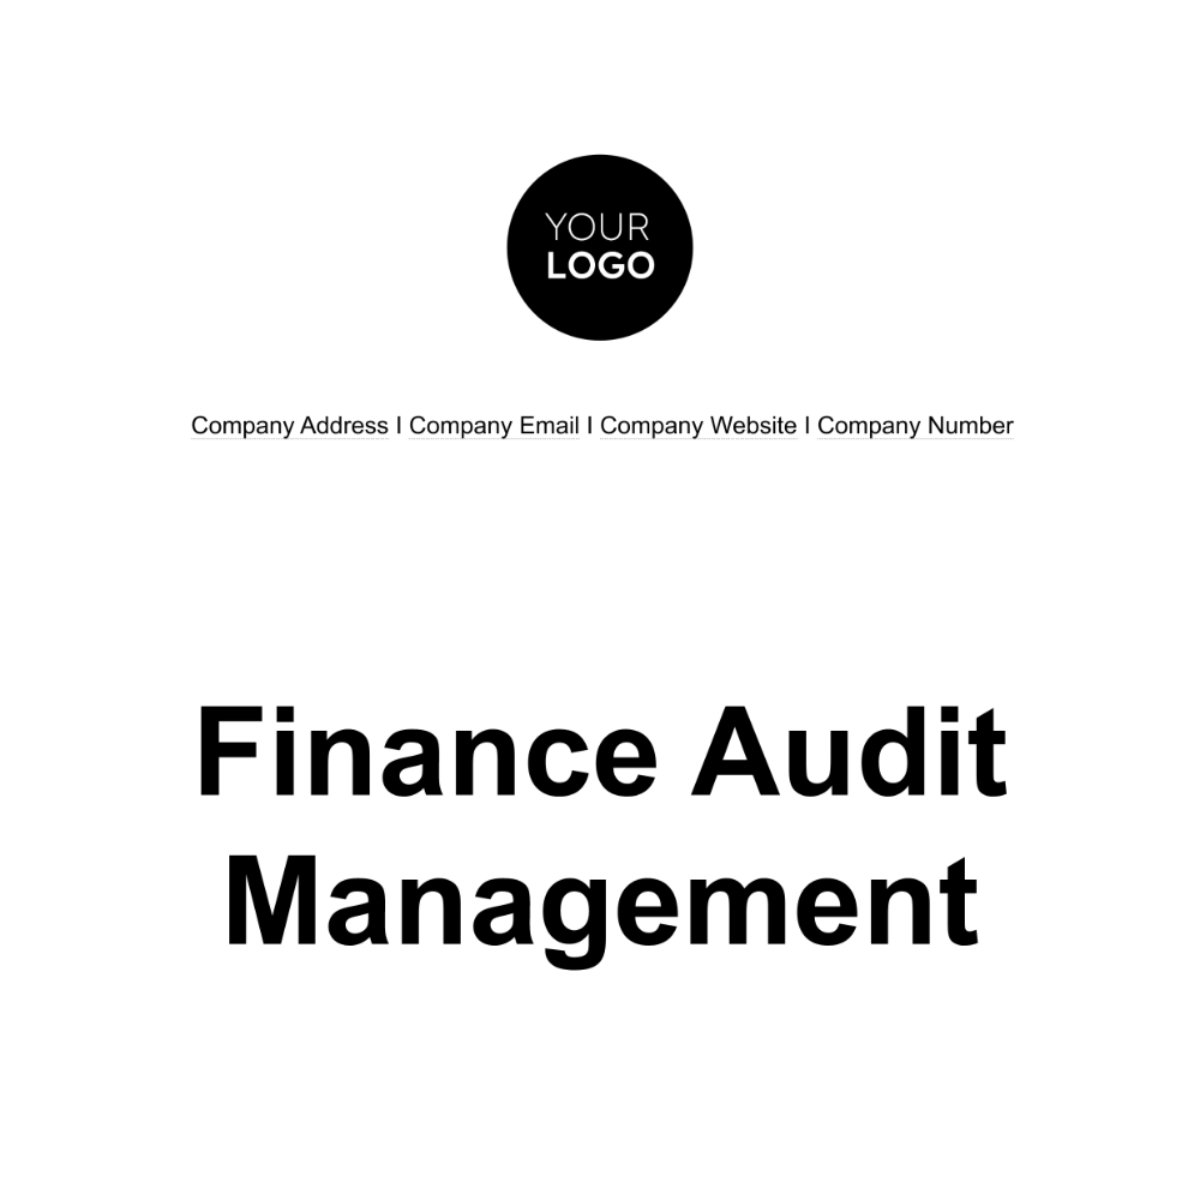 Free Finance Audit Management Template